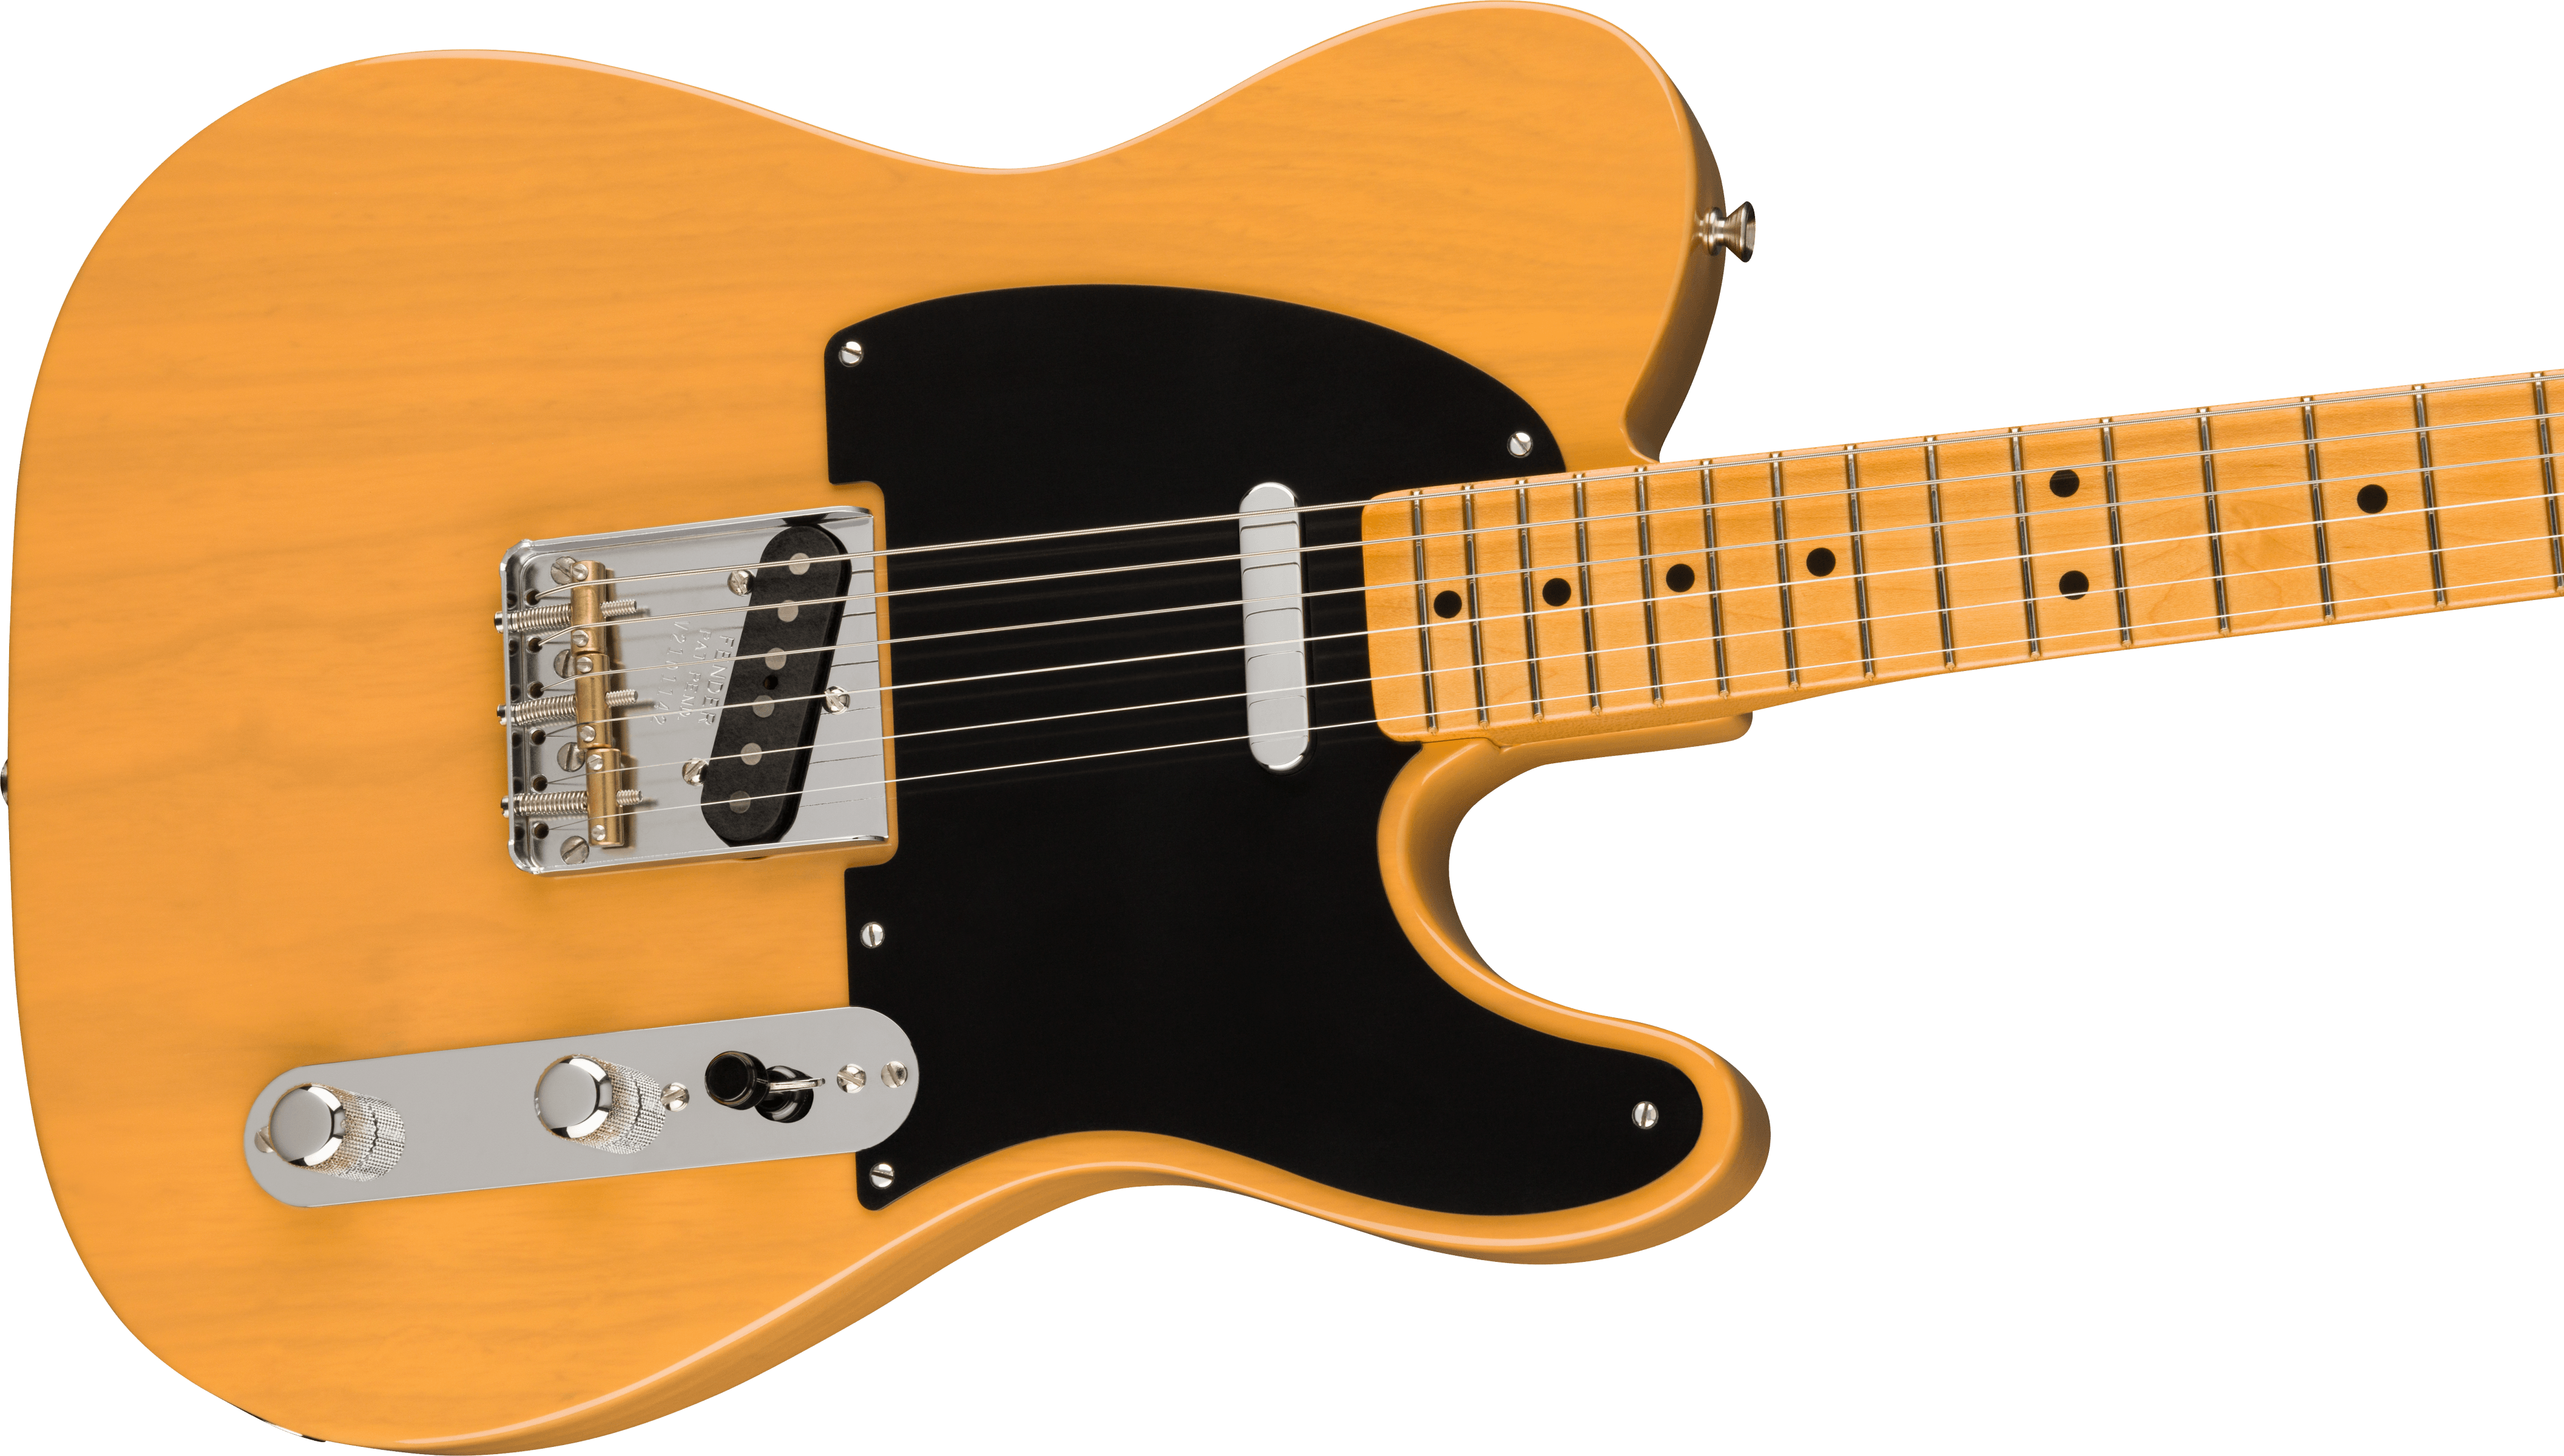 Fender American Vintage II 1951 Telecaster®, Maple Fingerboard, Butterscotch Blonde